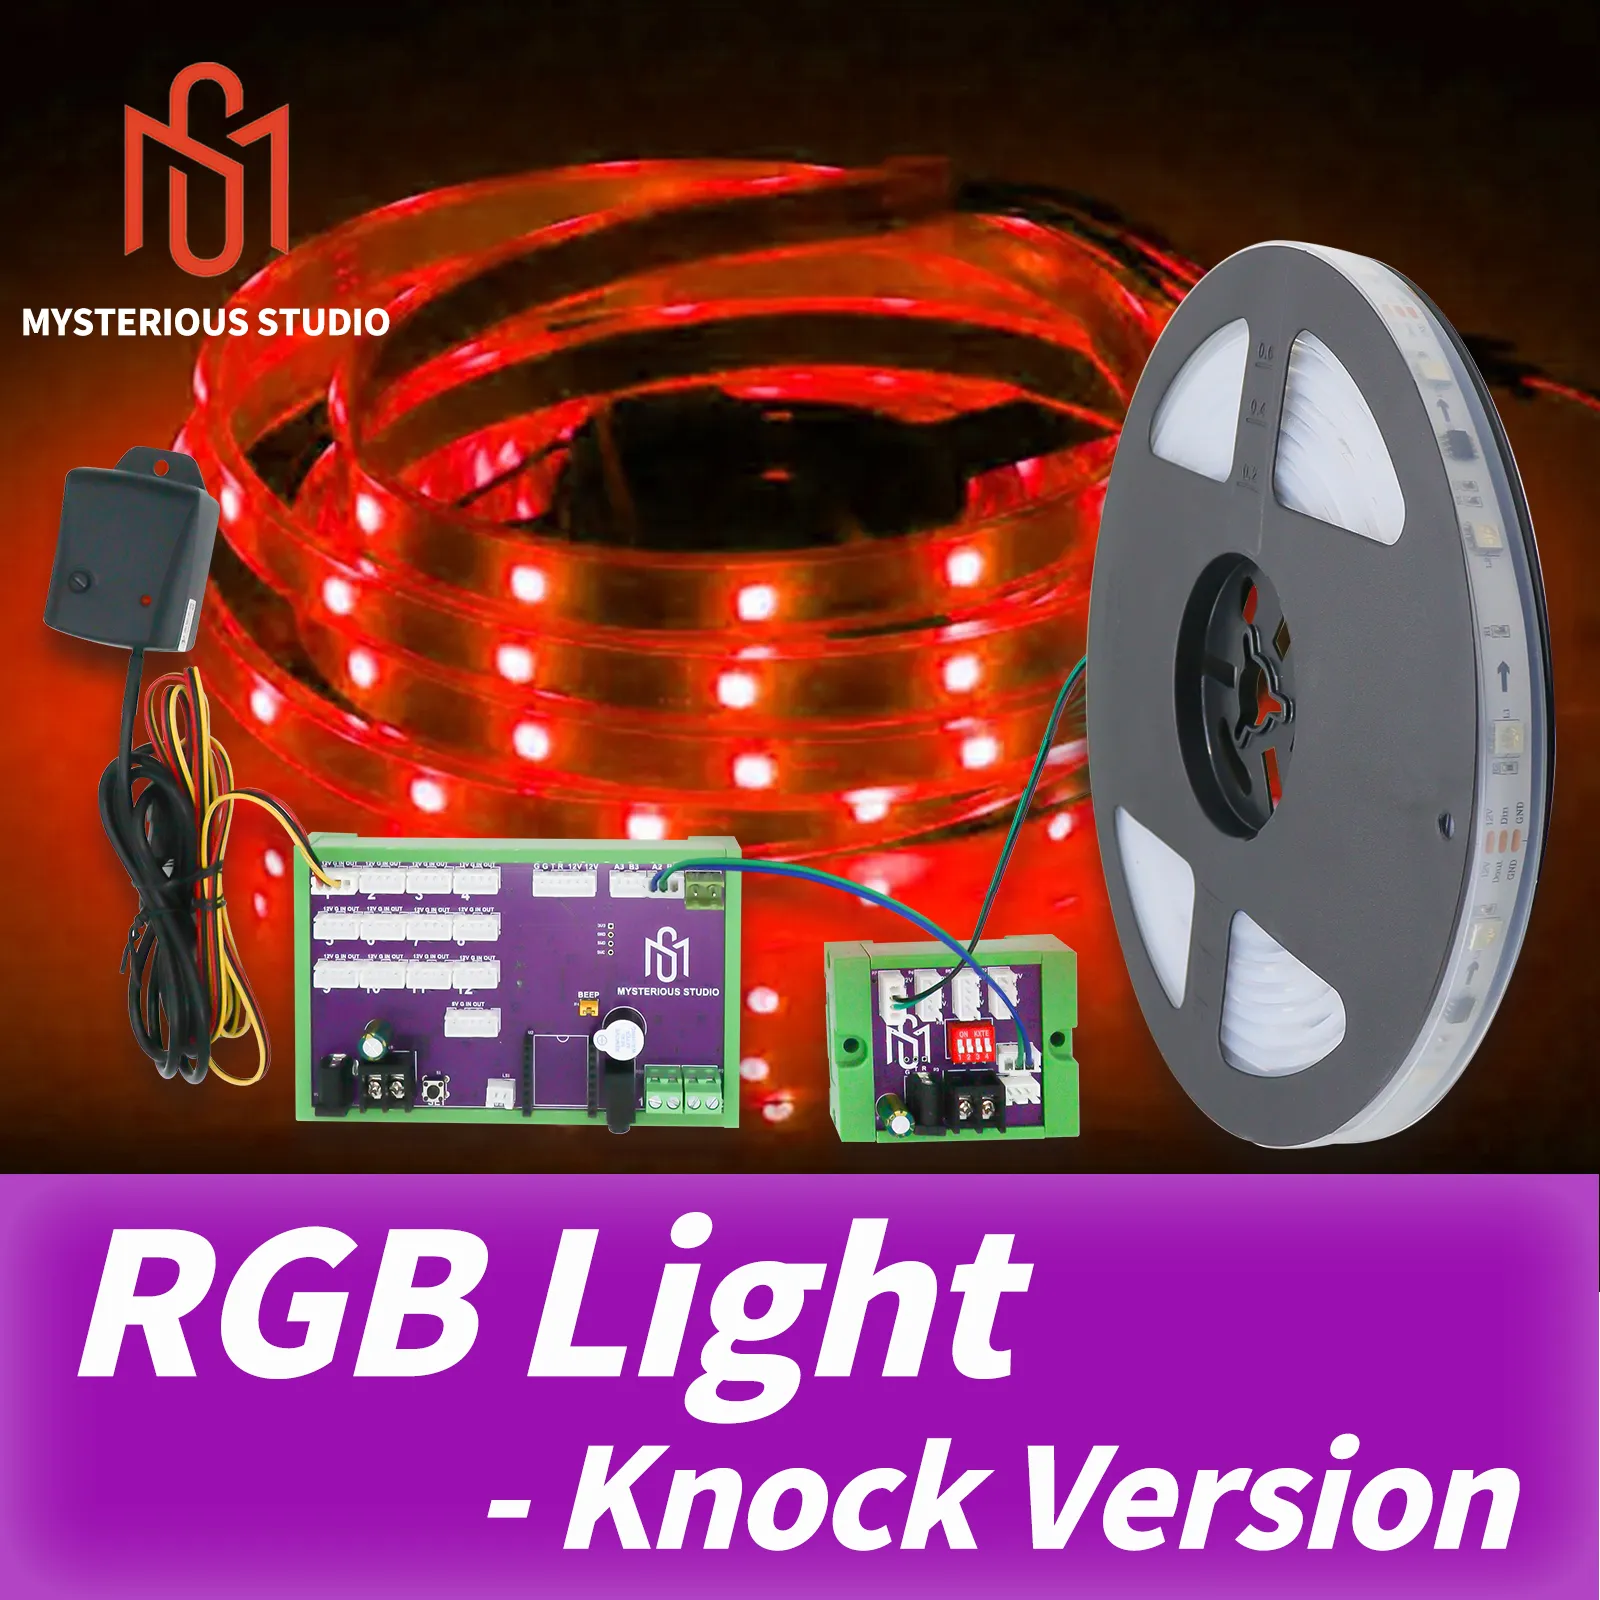 Mysterious Studio Escape Room knocking Belt Prop vibration sensor to light up the RGB led strip to unlock Knock Version